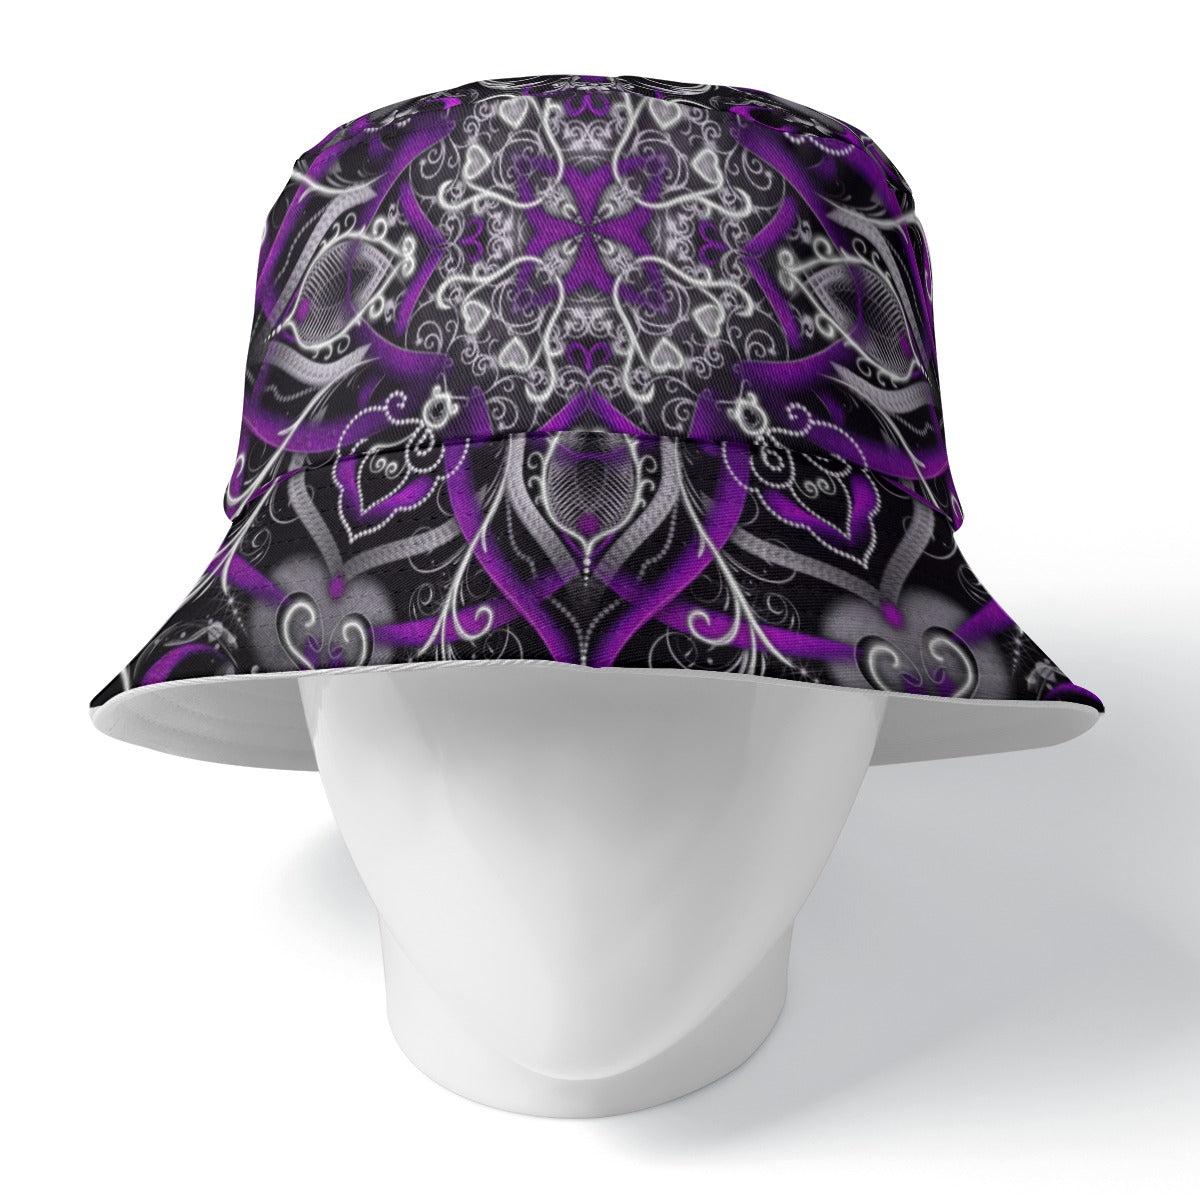 Versatile Vogue: Reversible Printed Bucket Hat for Effortless Style